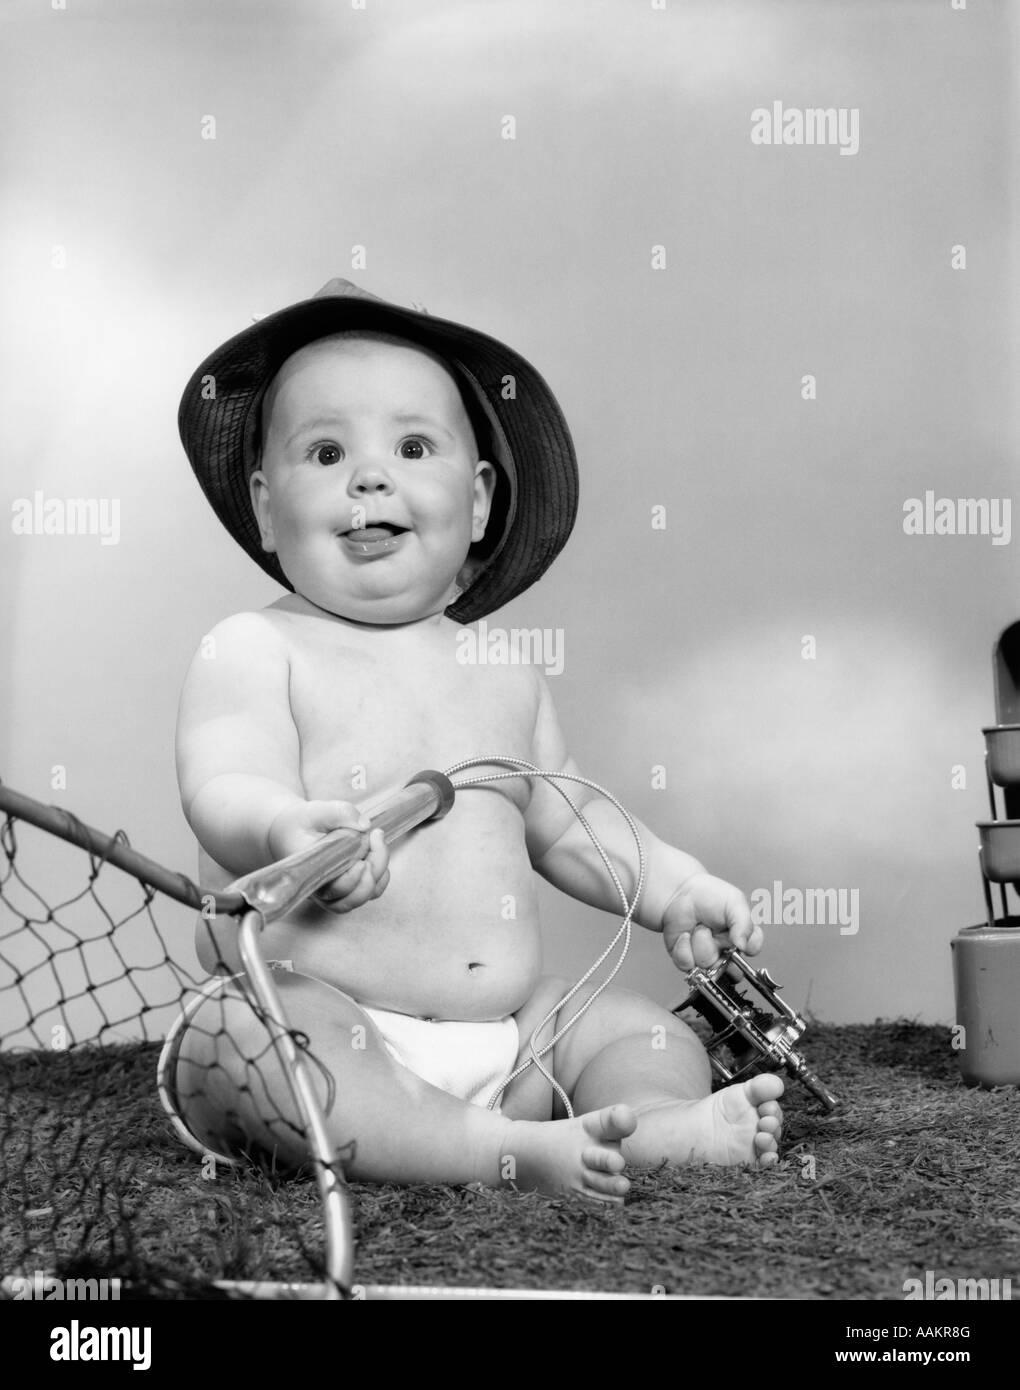 https://c8.alamy.com/comp/AAKR8G/1960s-baby-girl-wearing-fishing-hat-holding-net-and-reel-fishing-gear-AAKR8G.jpg